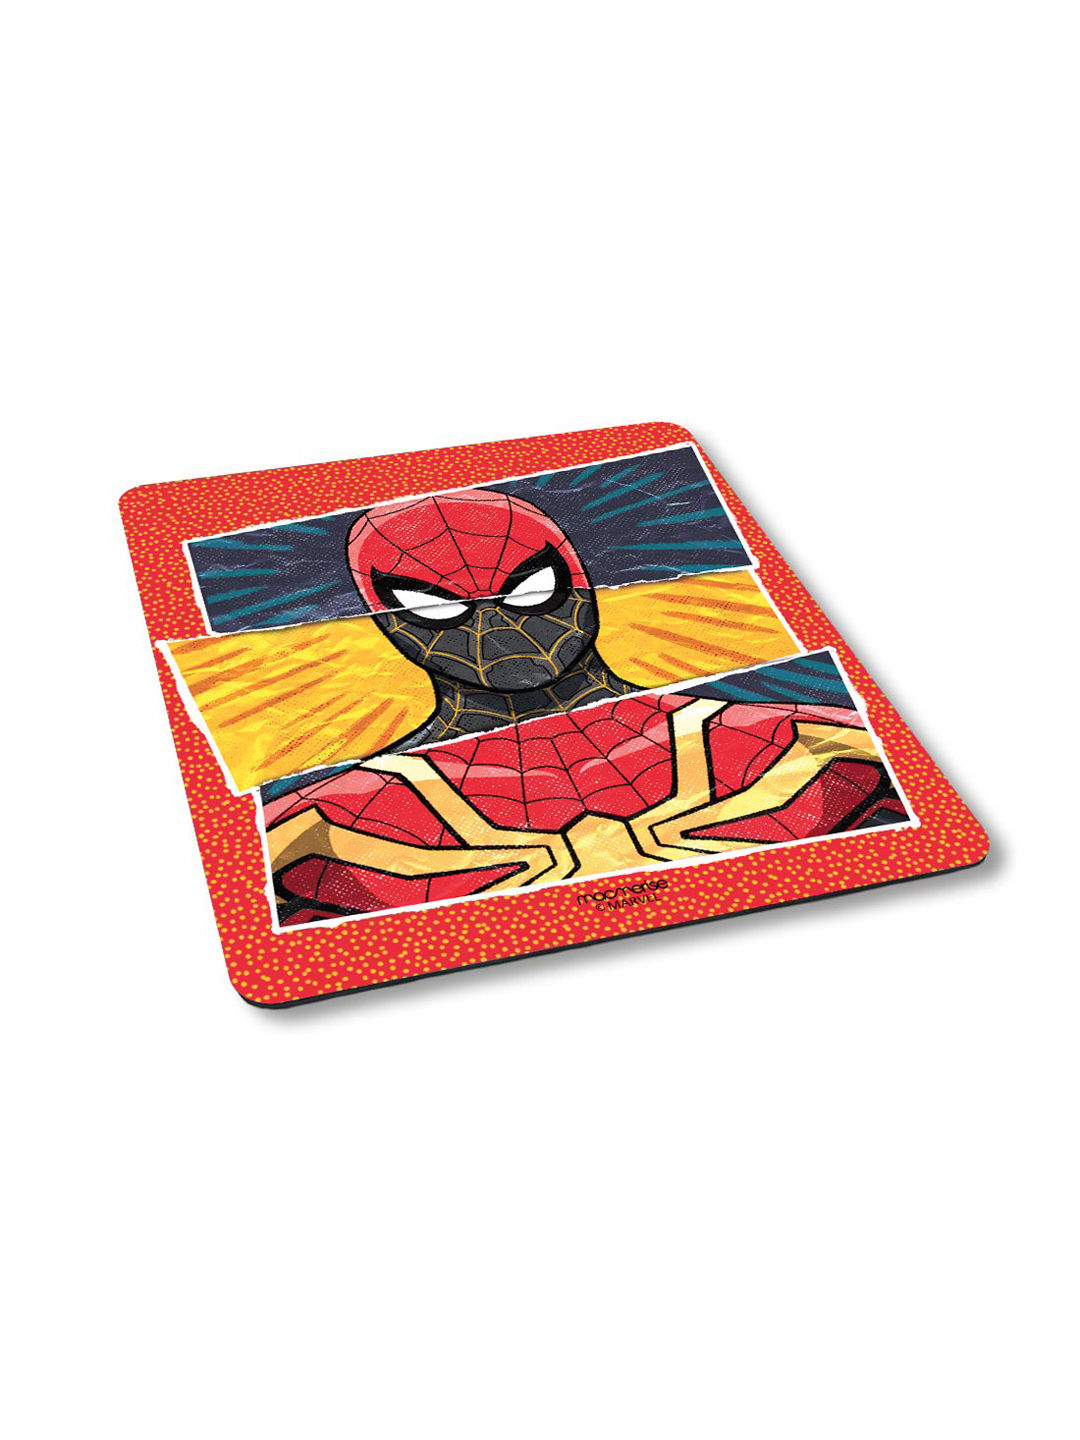 Spiderman Engage - Macmerise Mouse Pad